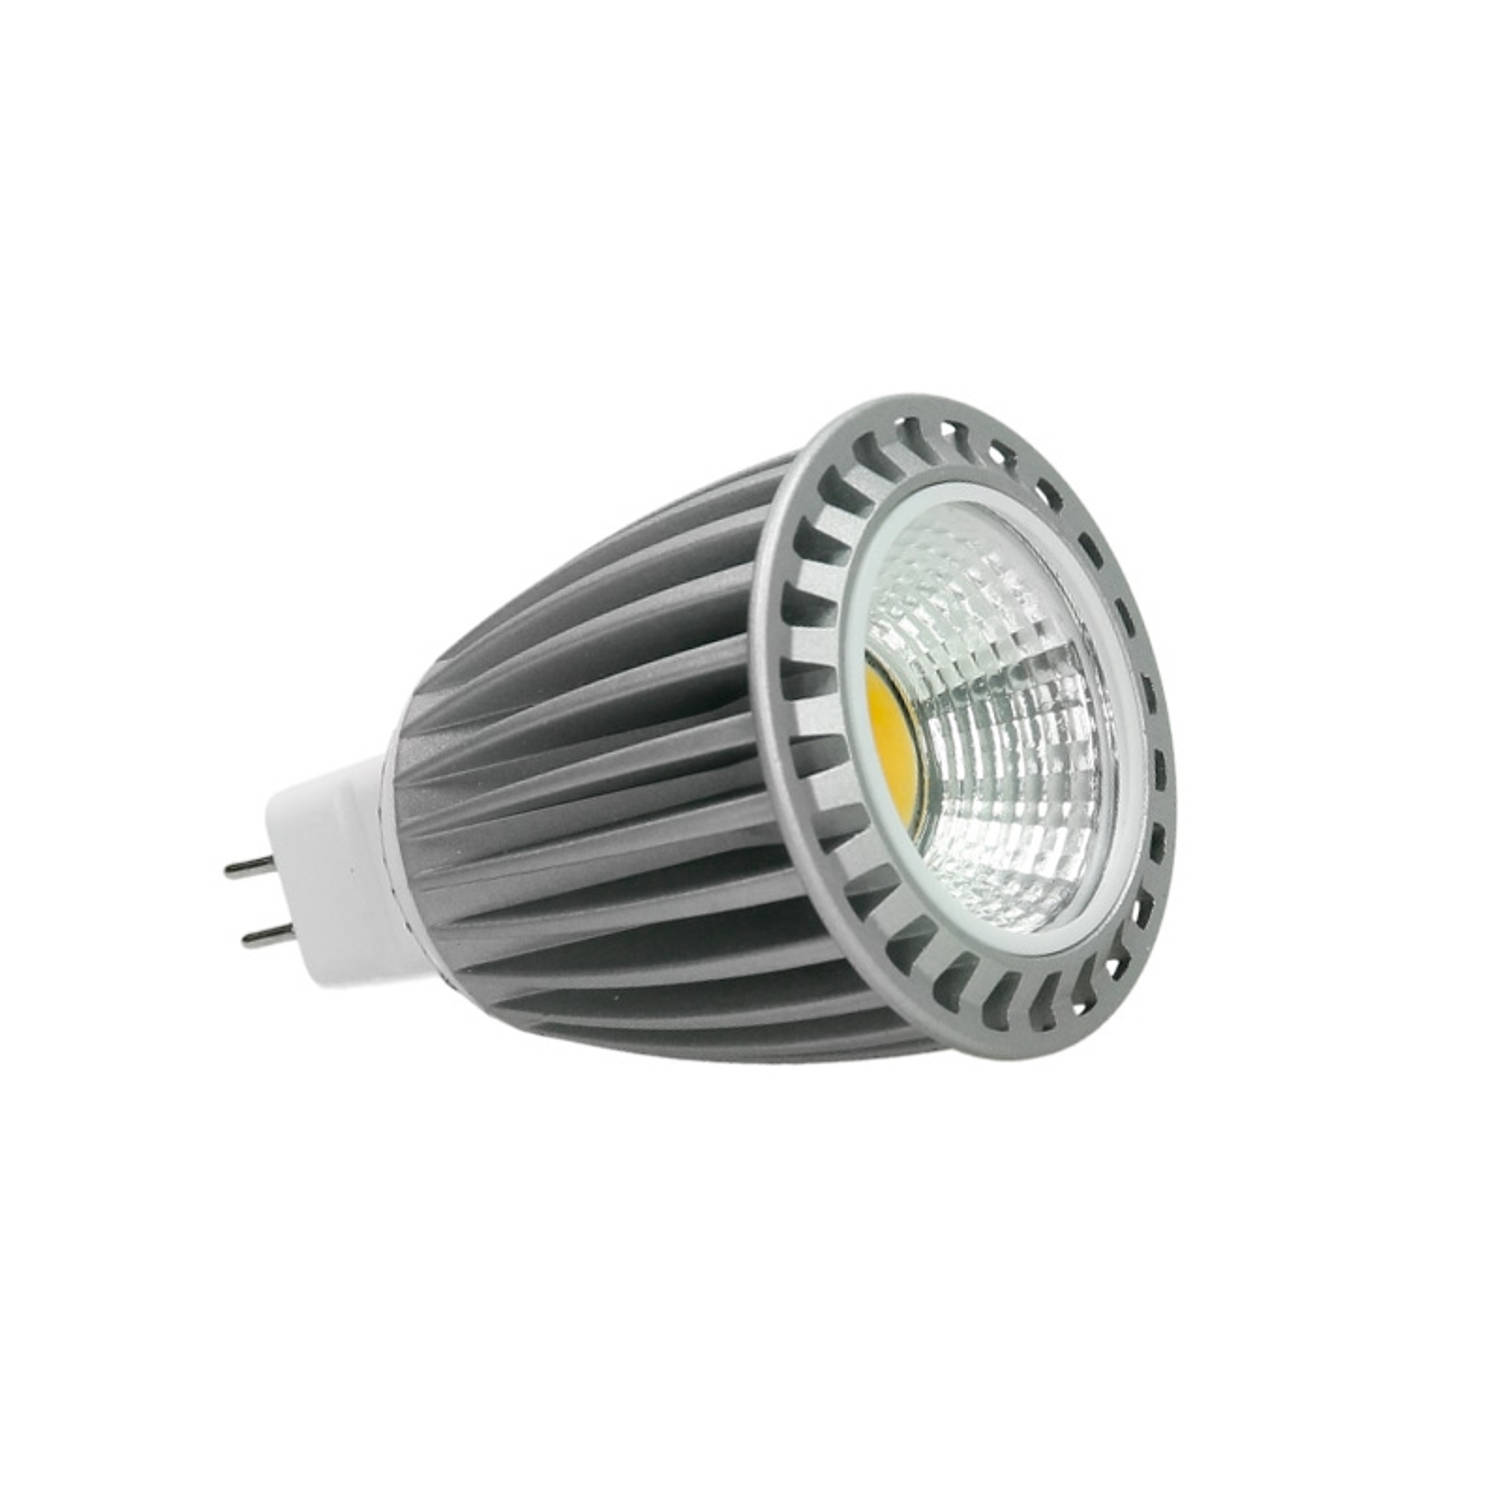 LED-reflectorspot MR16 9 Watt uitvoering COB warm wit